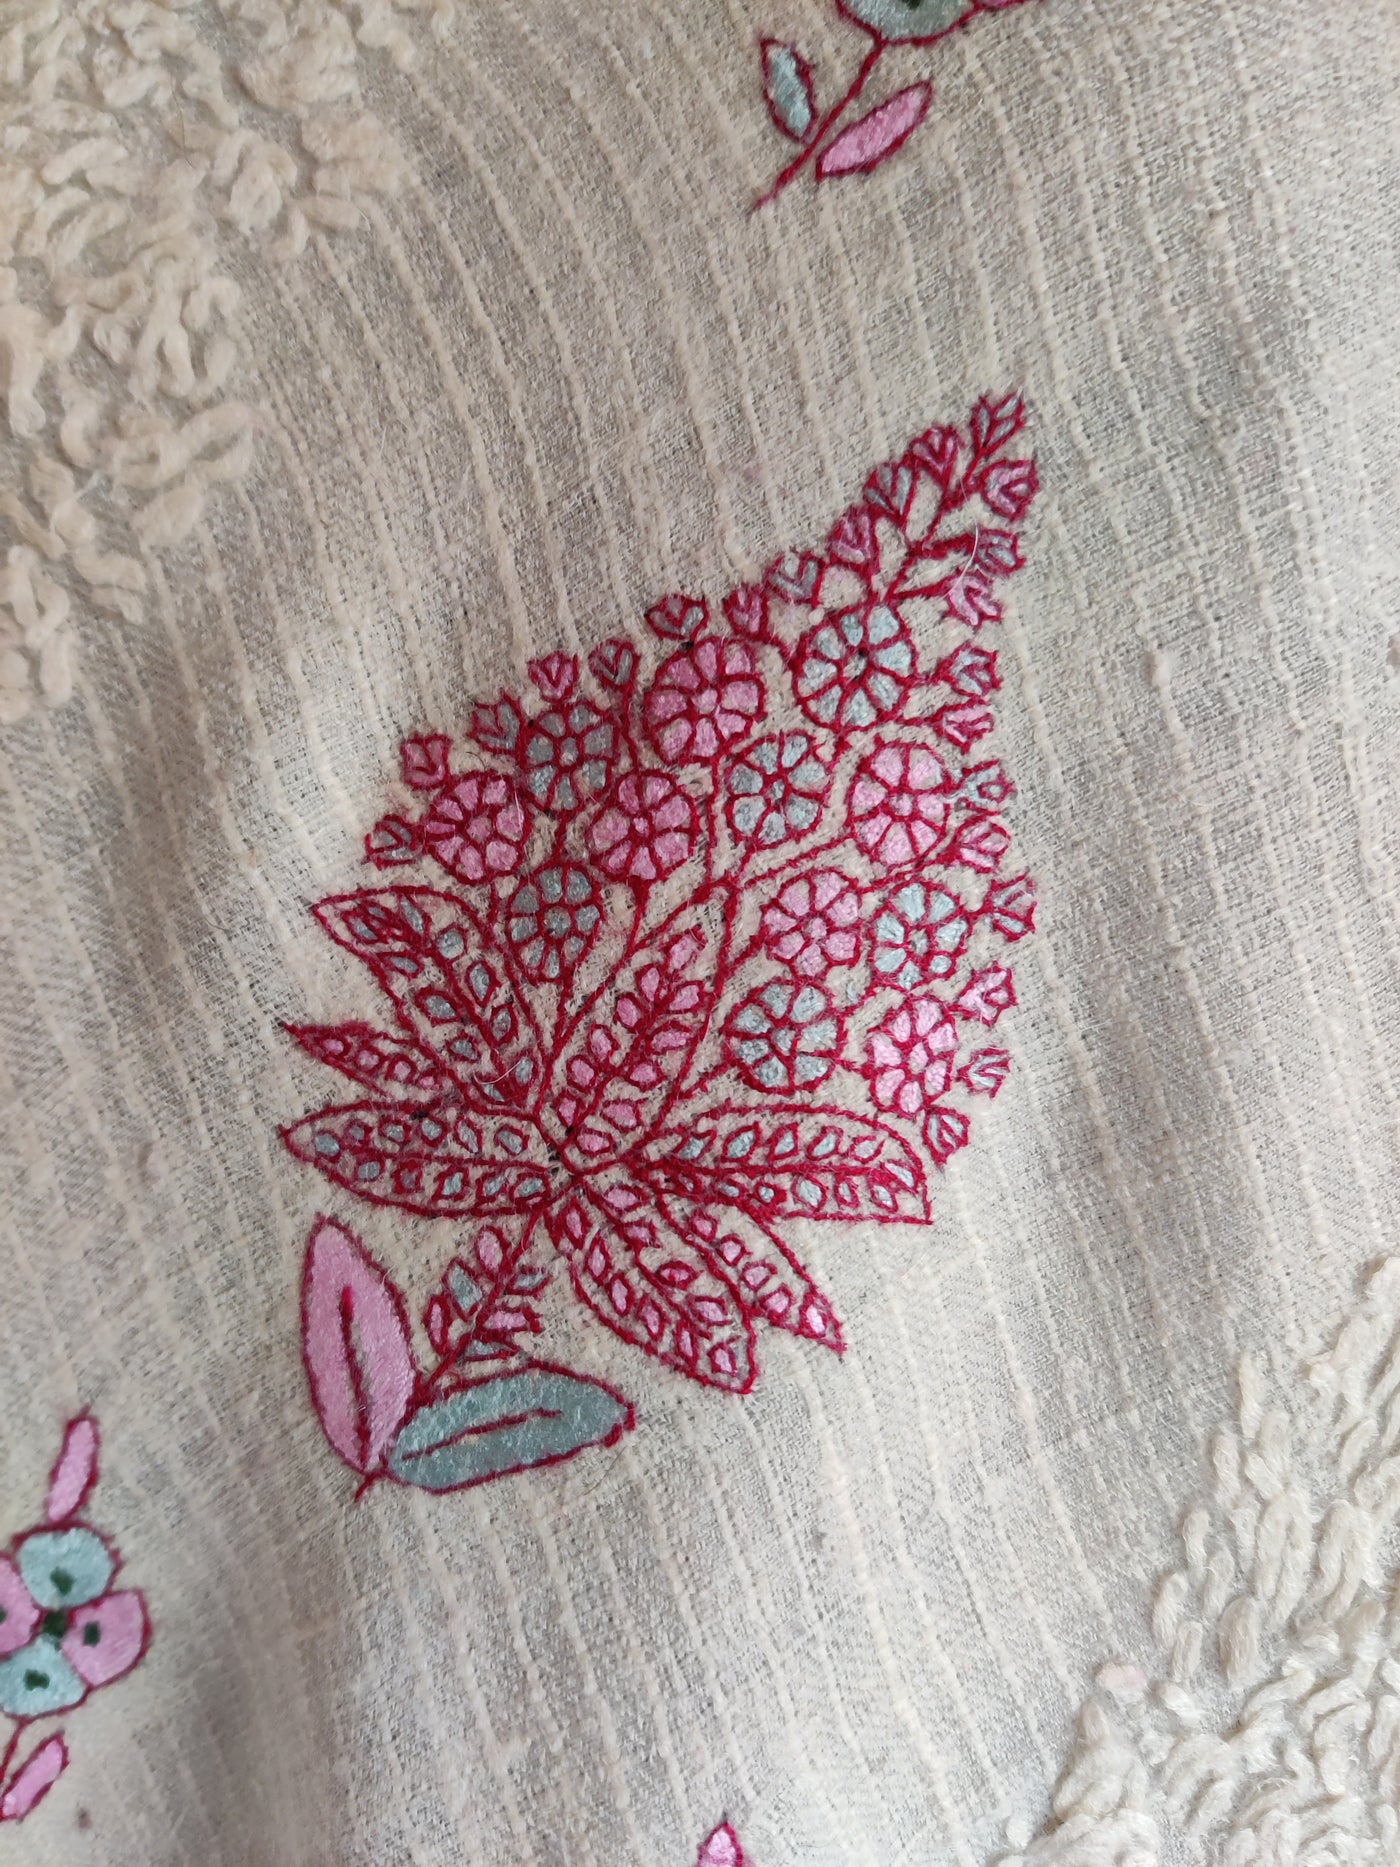 Zephyr of Kashmir Sozni Embroidered Shawl: Pure Pashmina